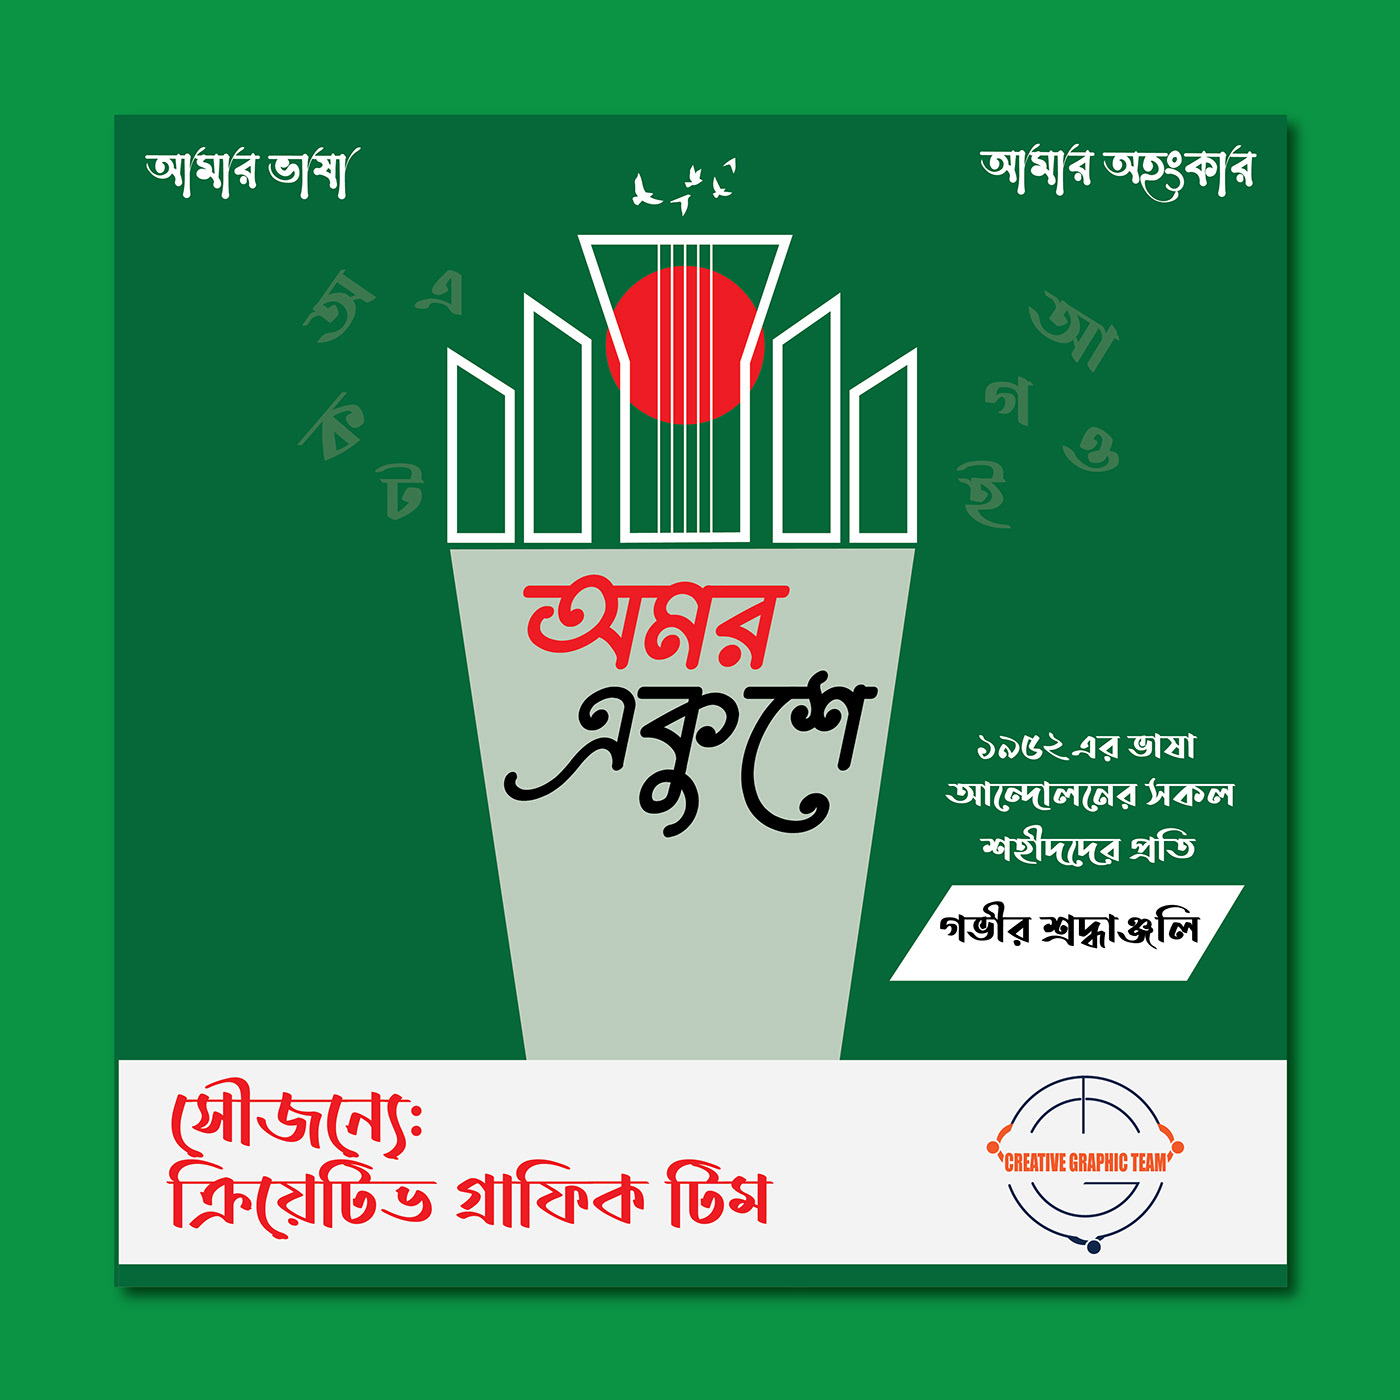 21 february عيد الفطر  مستلزمات طبيه Mother Language day আন্তর্জাতিক মাতৃভাষা দিবস language day Shaheed minar Bangladesh 1952 Language Movement